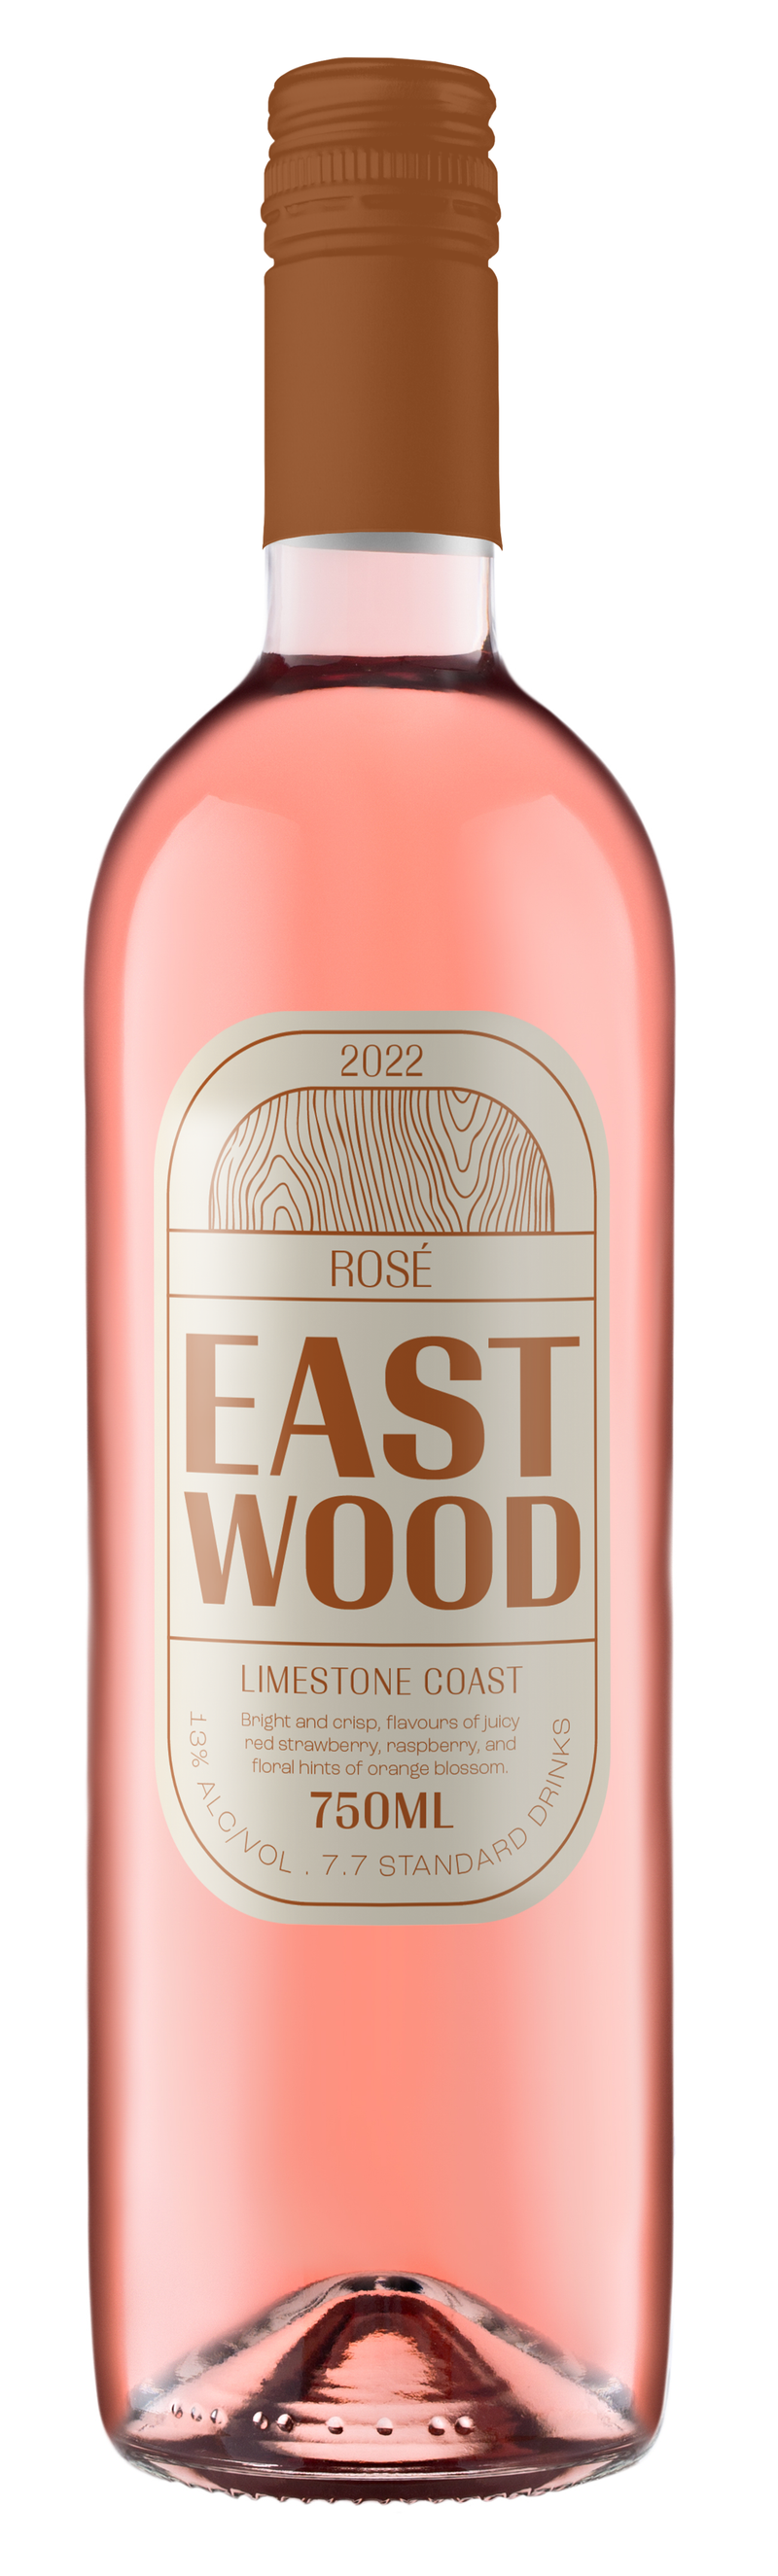 12 pack - Eastwood - Rosé